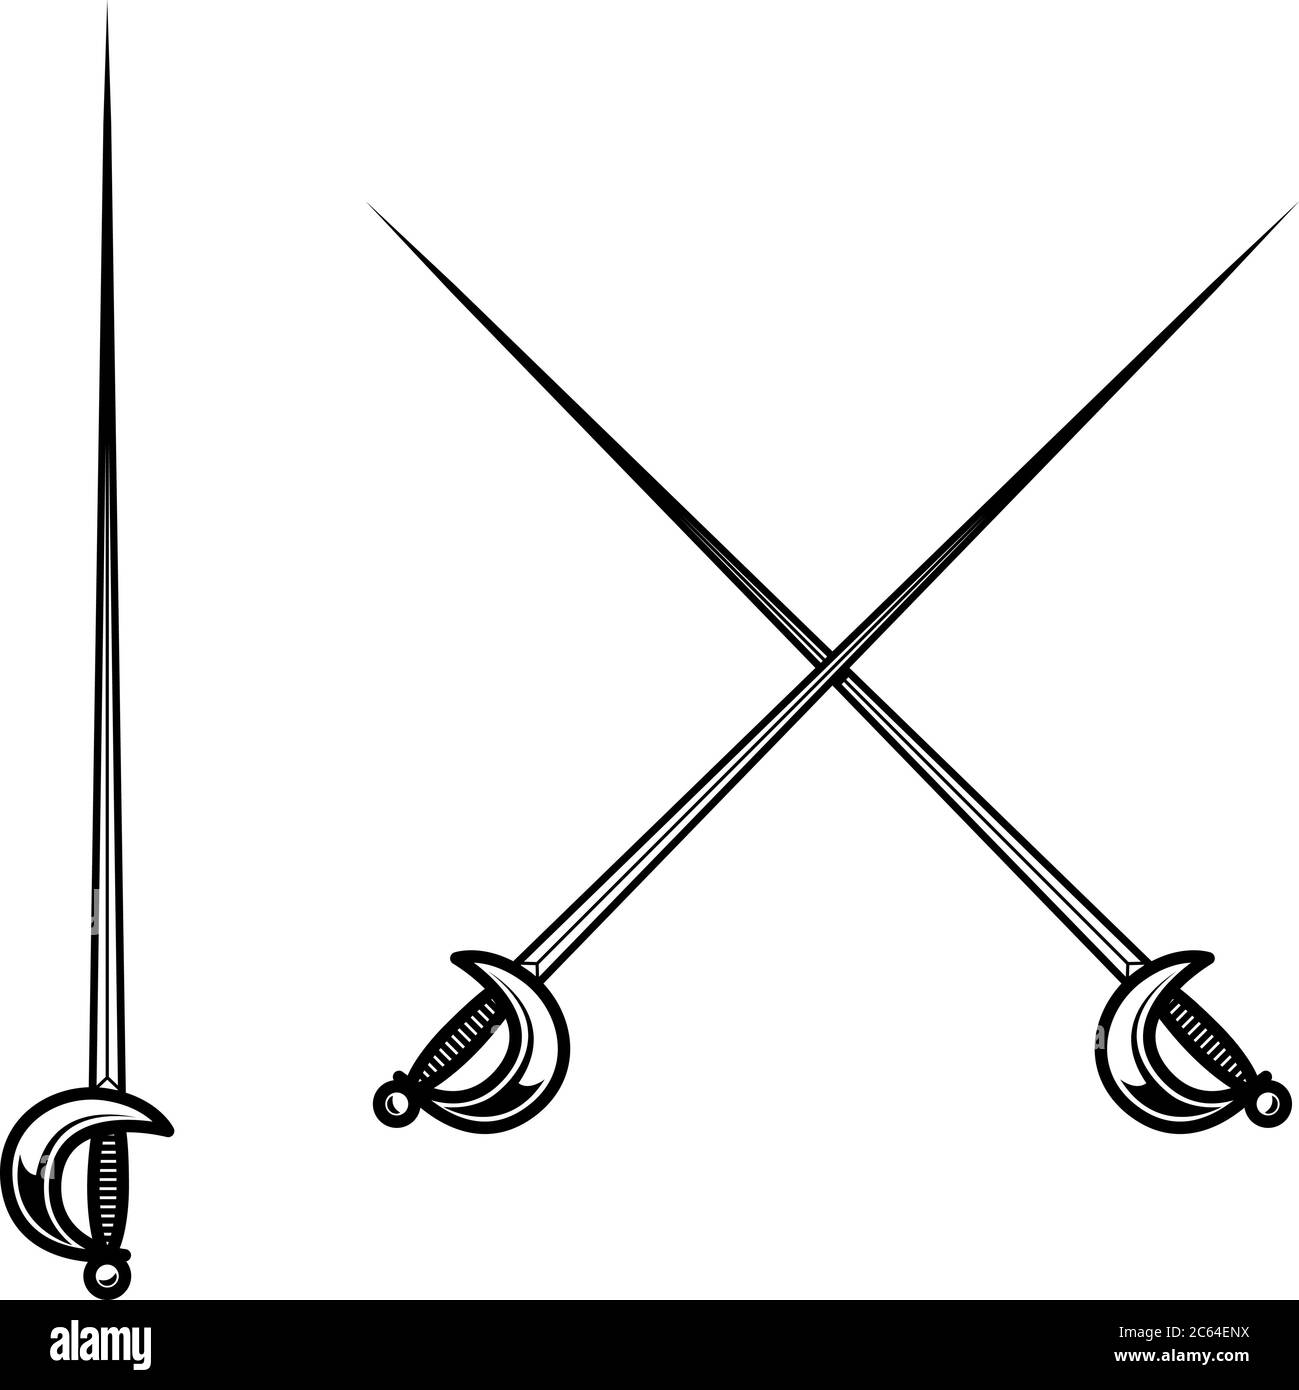 Espadas de esgrima Imágenes recortadas de stock - Alamy